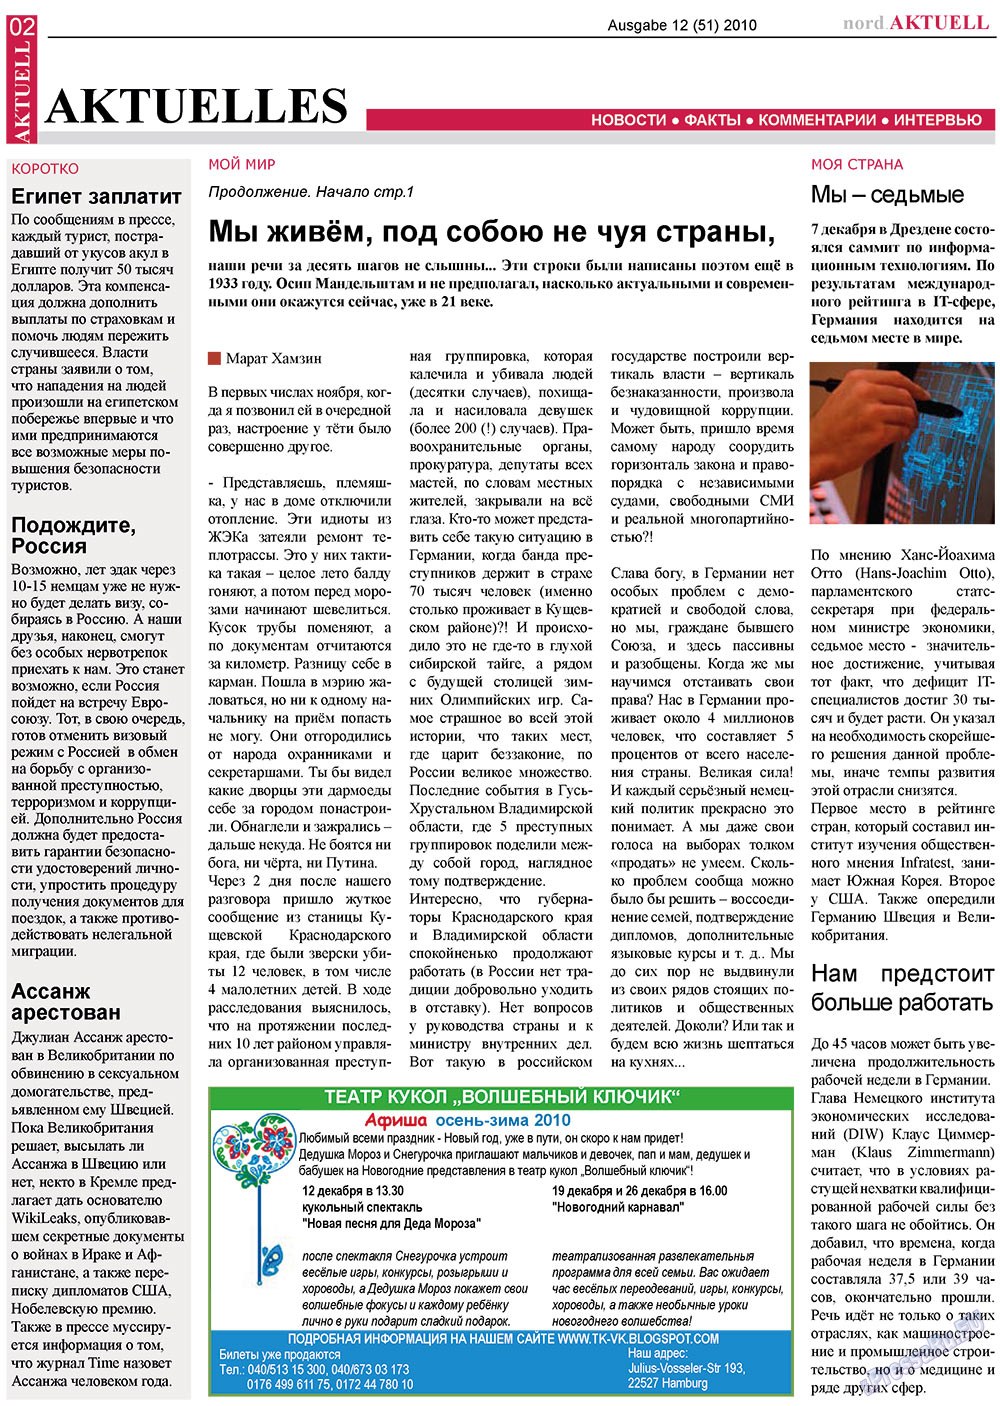 nord.Aktuell, газета. 2010 №12 стр.2